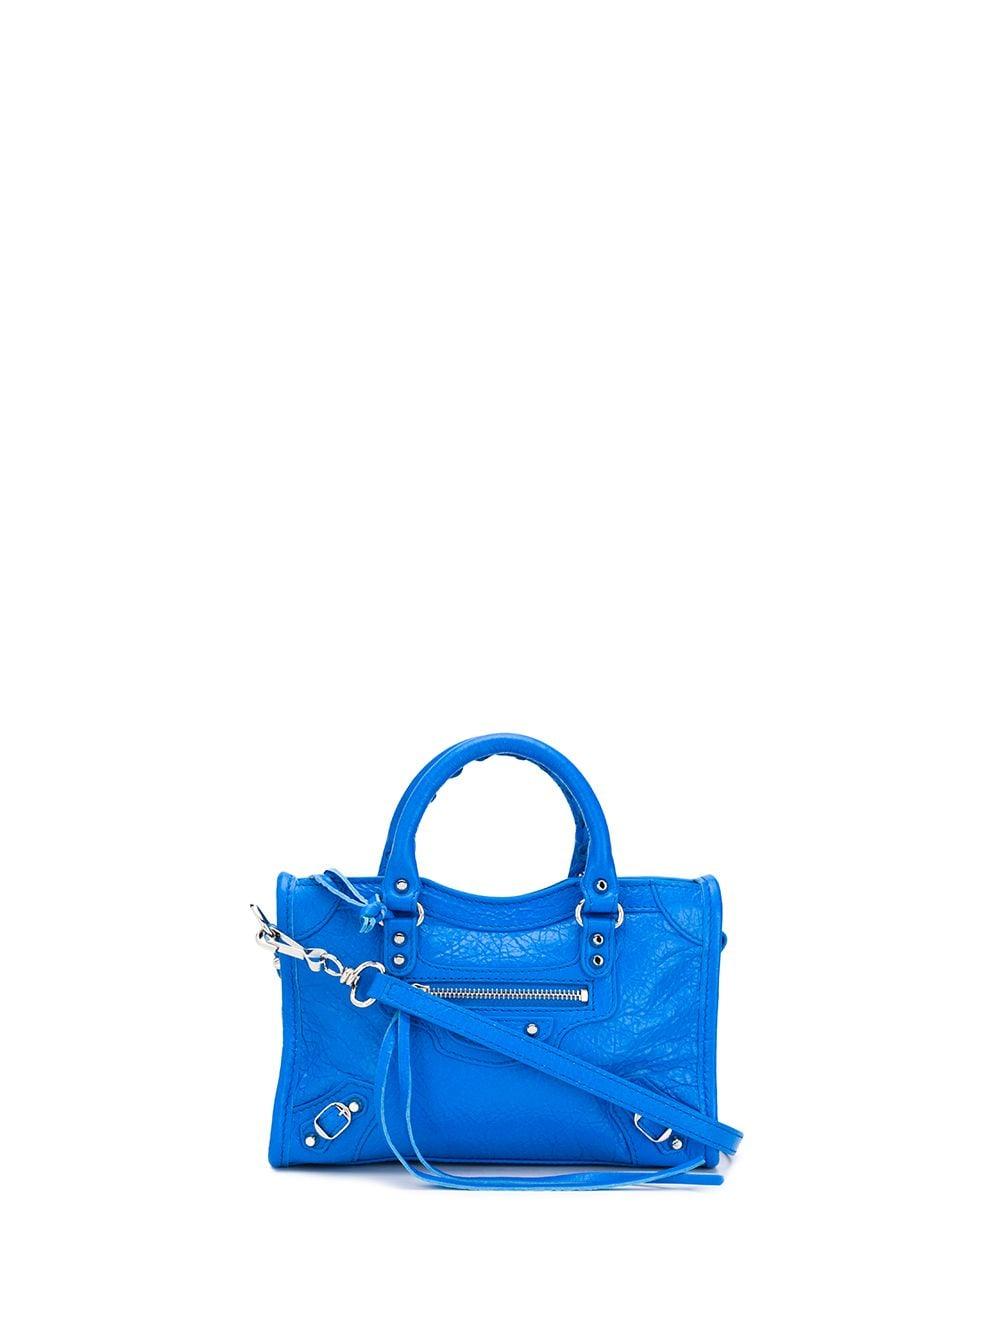 Balenciaga Classic City Nylon Bag in Blue